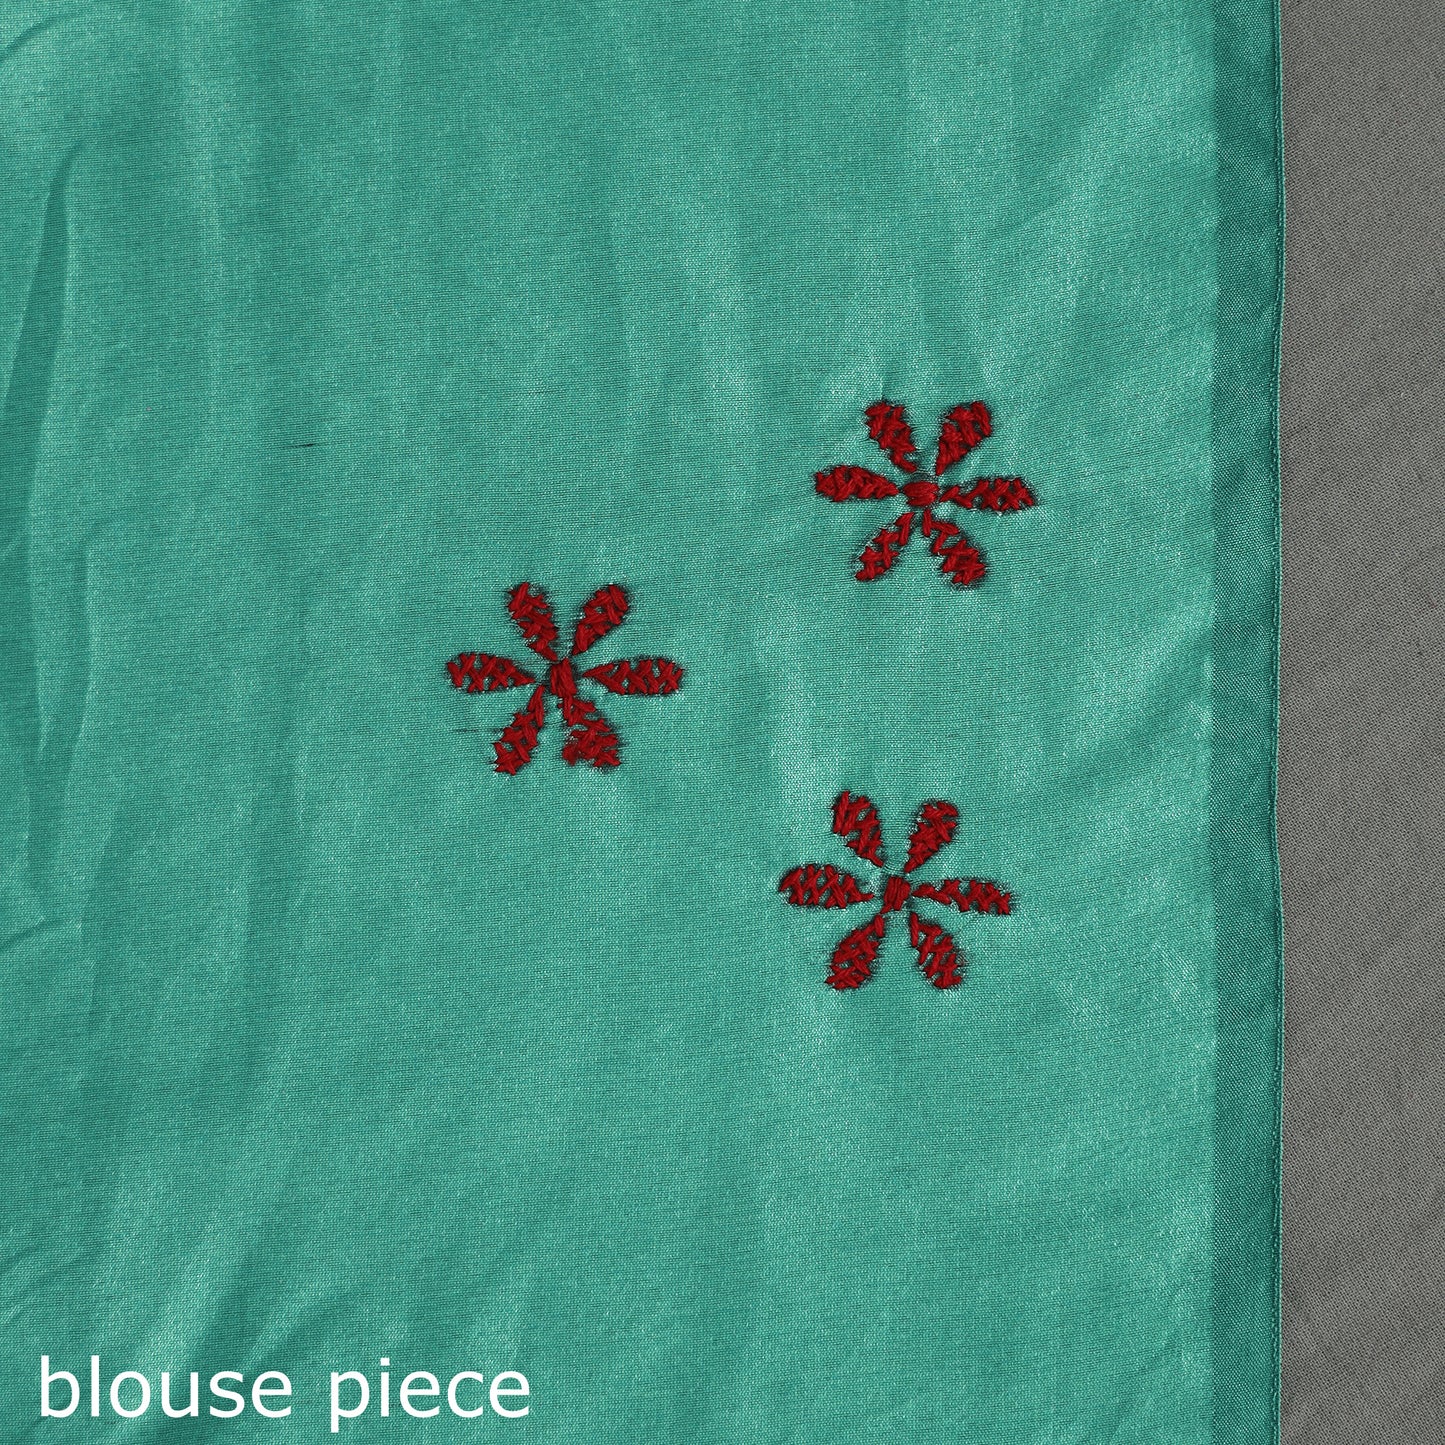 Embroidery saree